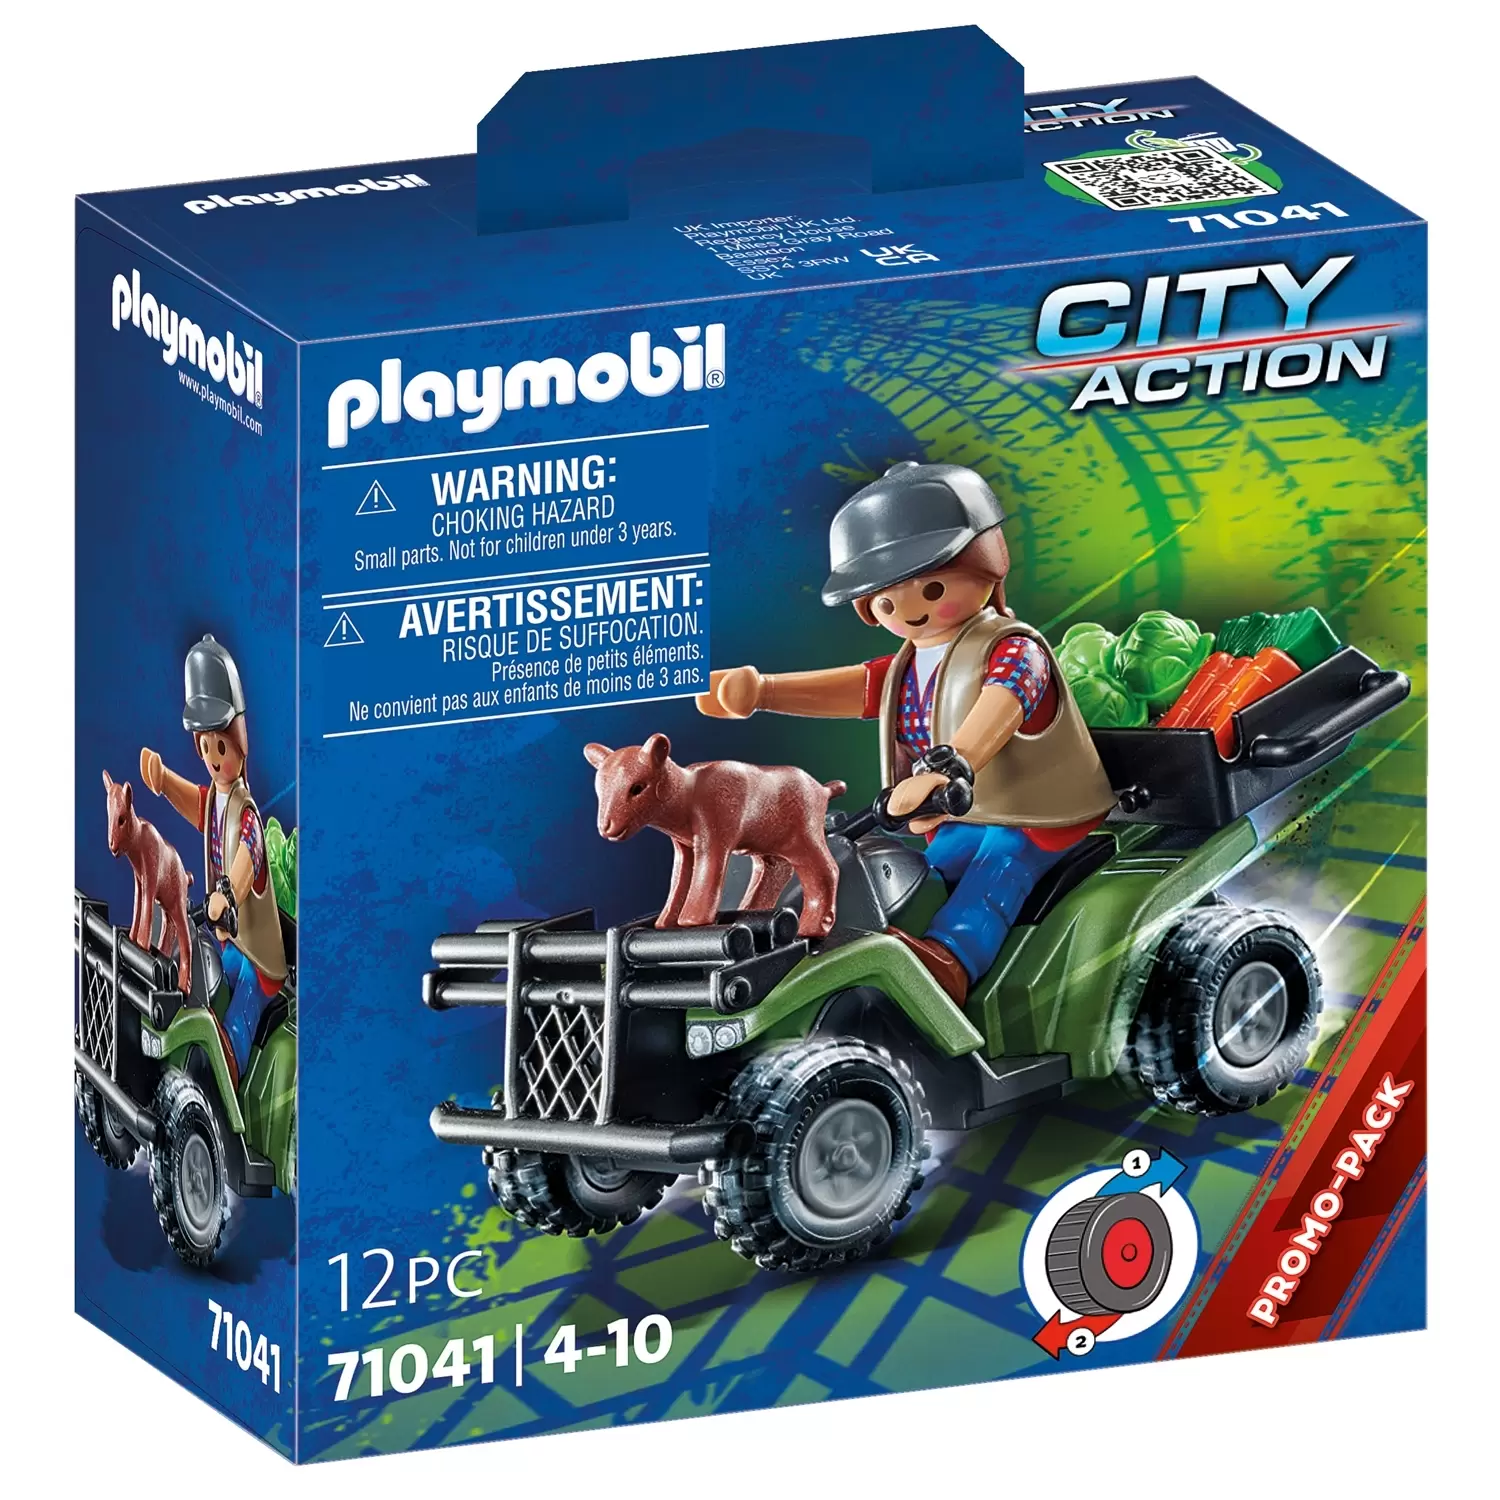 Playmobil Country 70887 Ferme avec animaux - Playmobil - à la Fnac